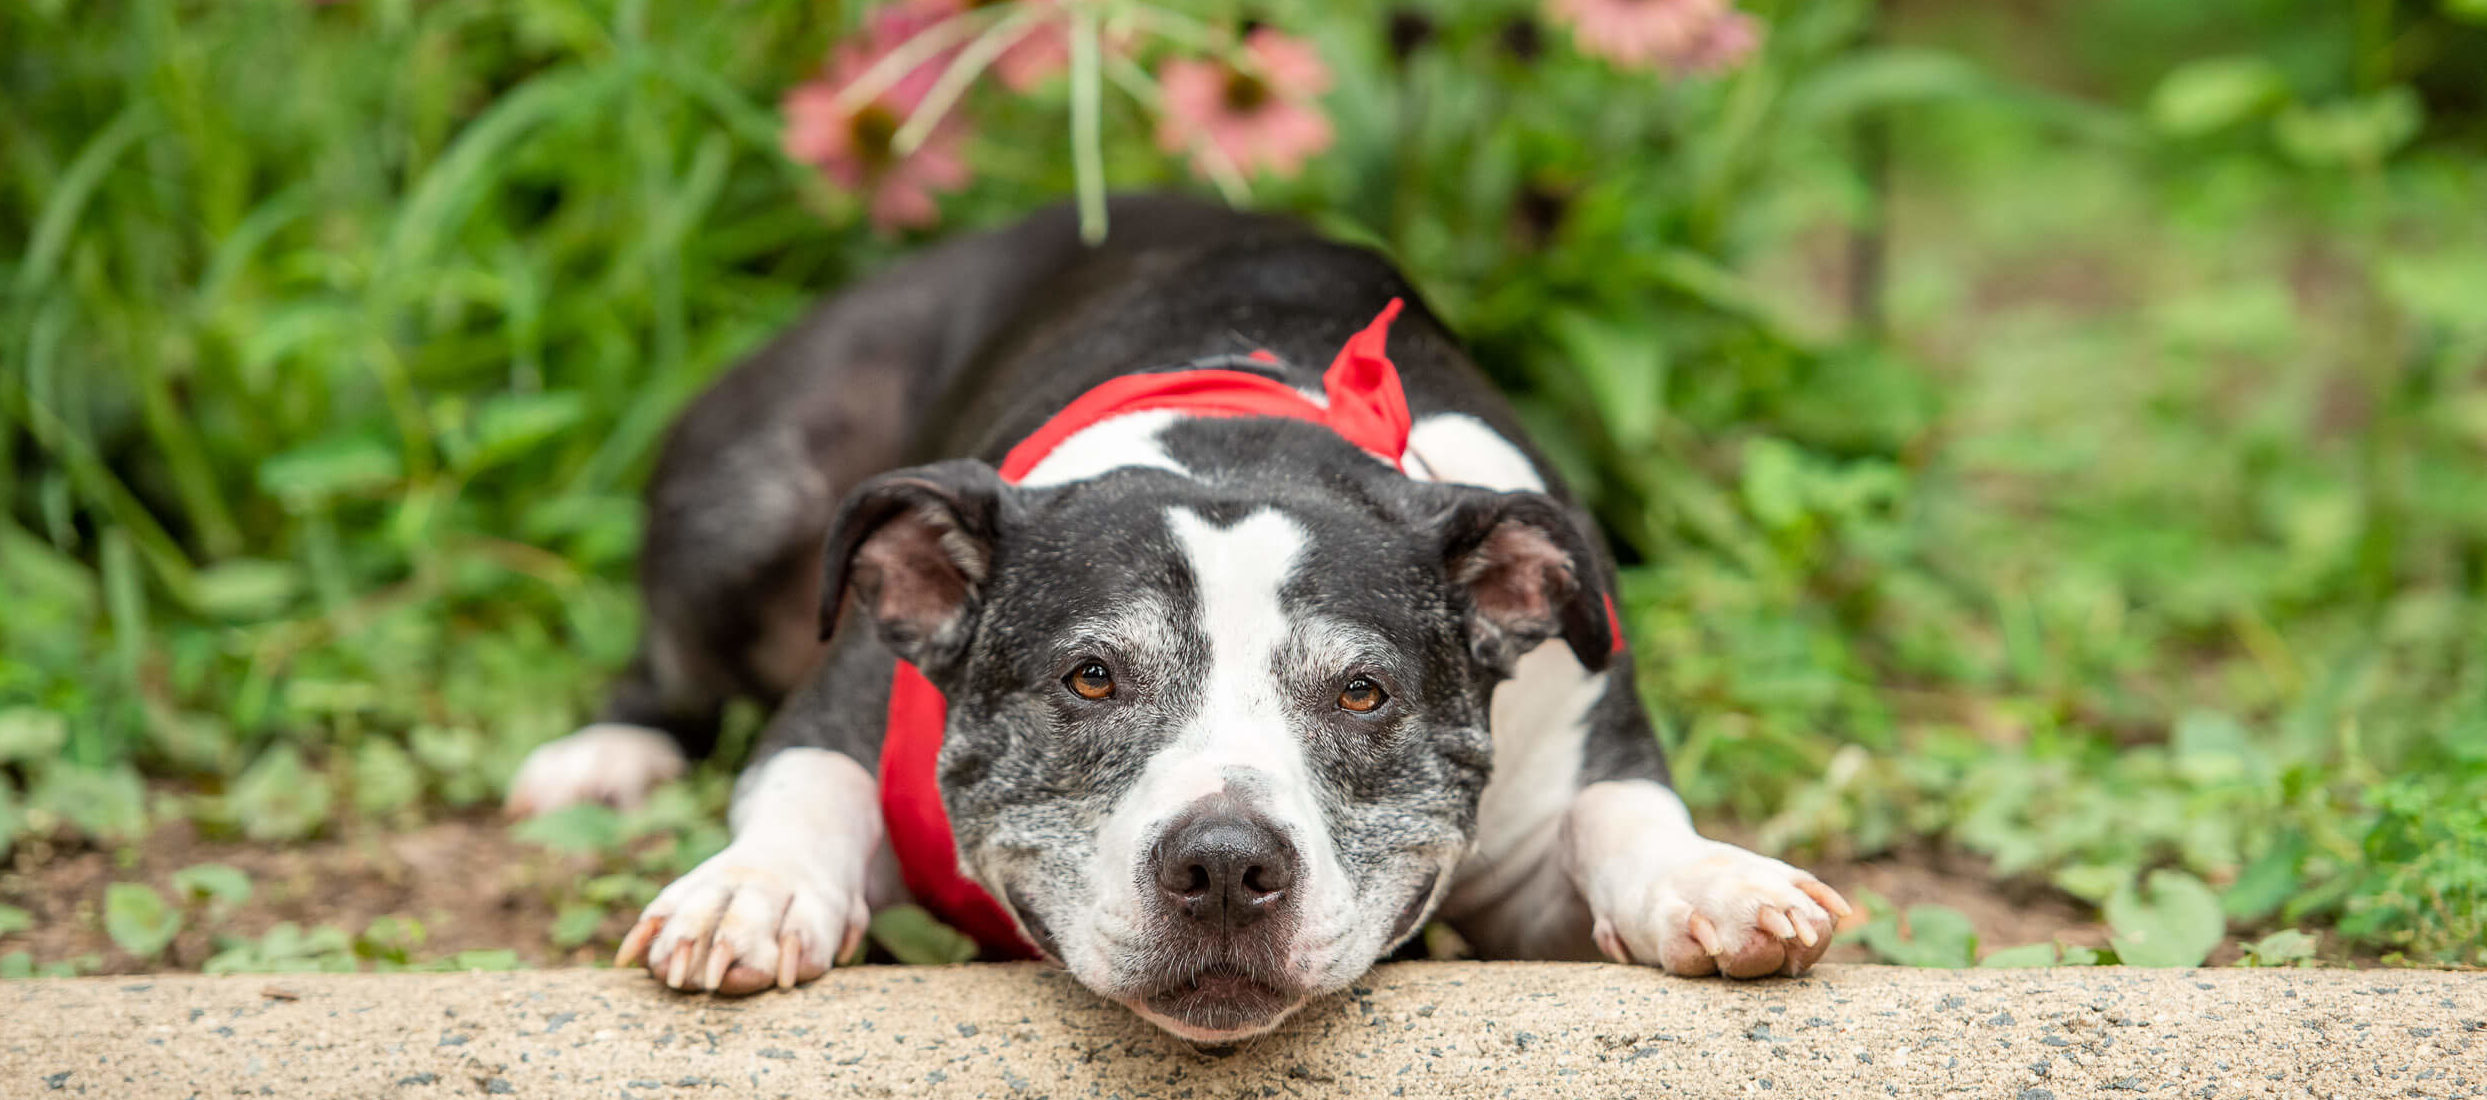 Cute black and white dog smiling wearing red Off Leash Dog Training bandana.